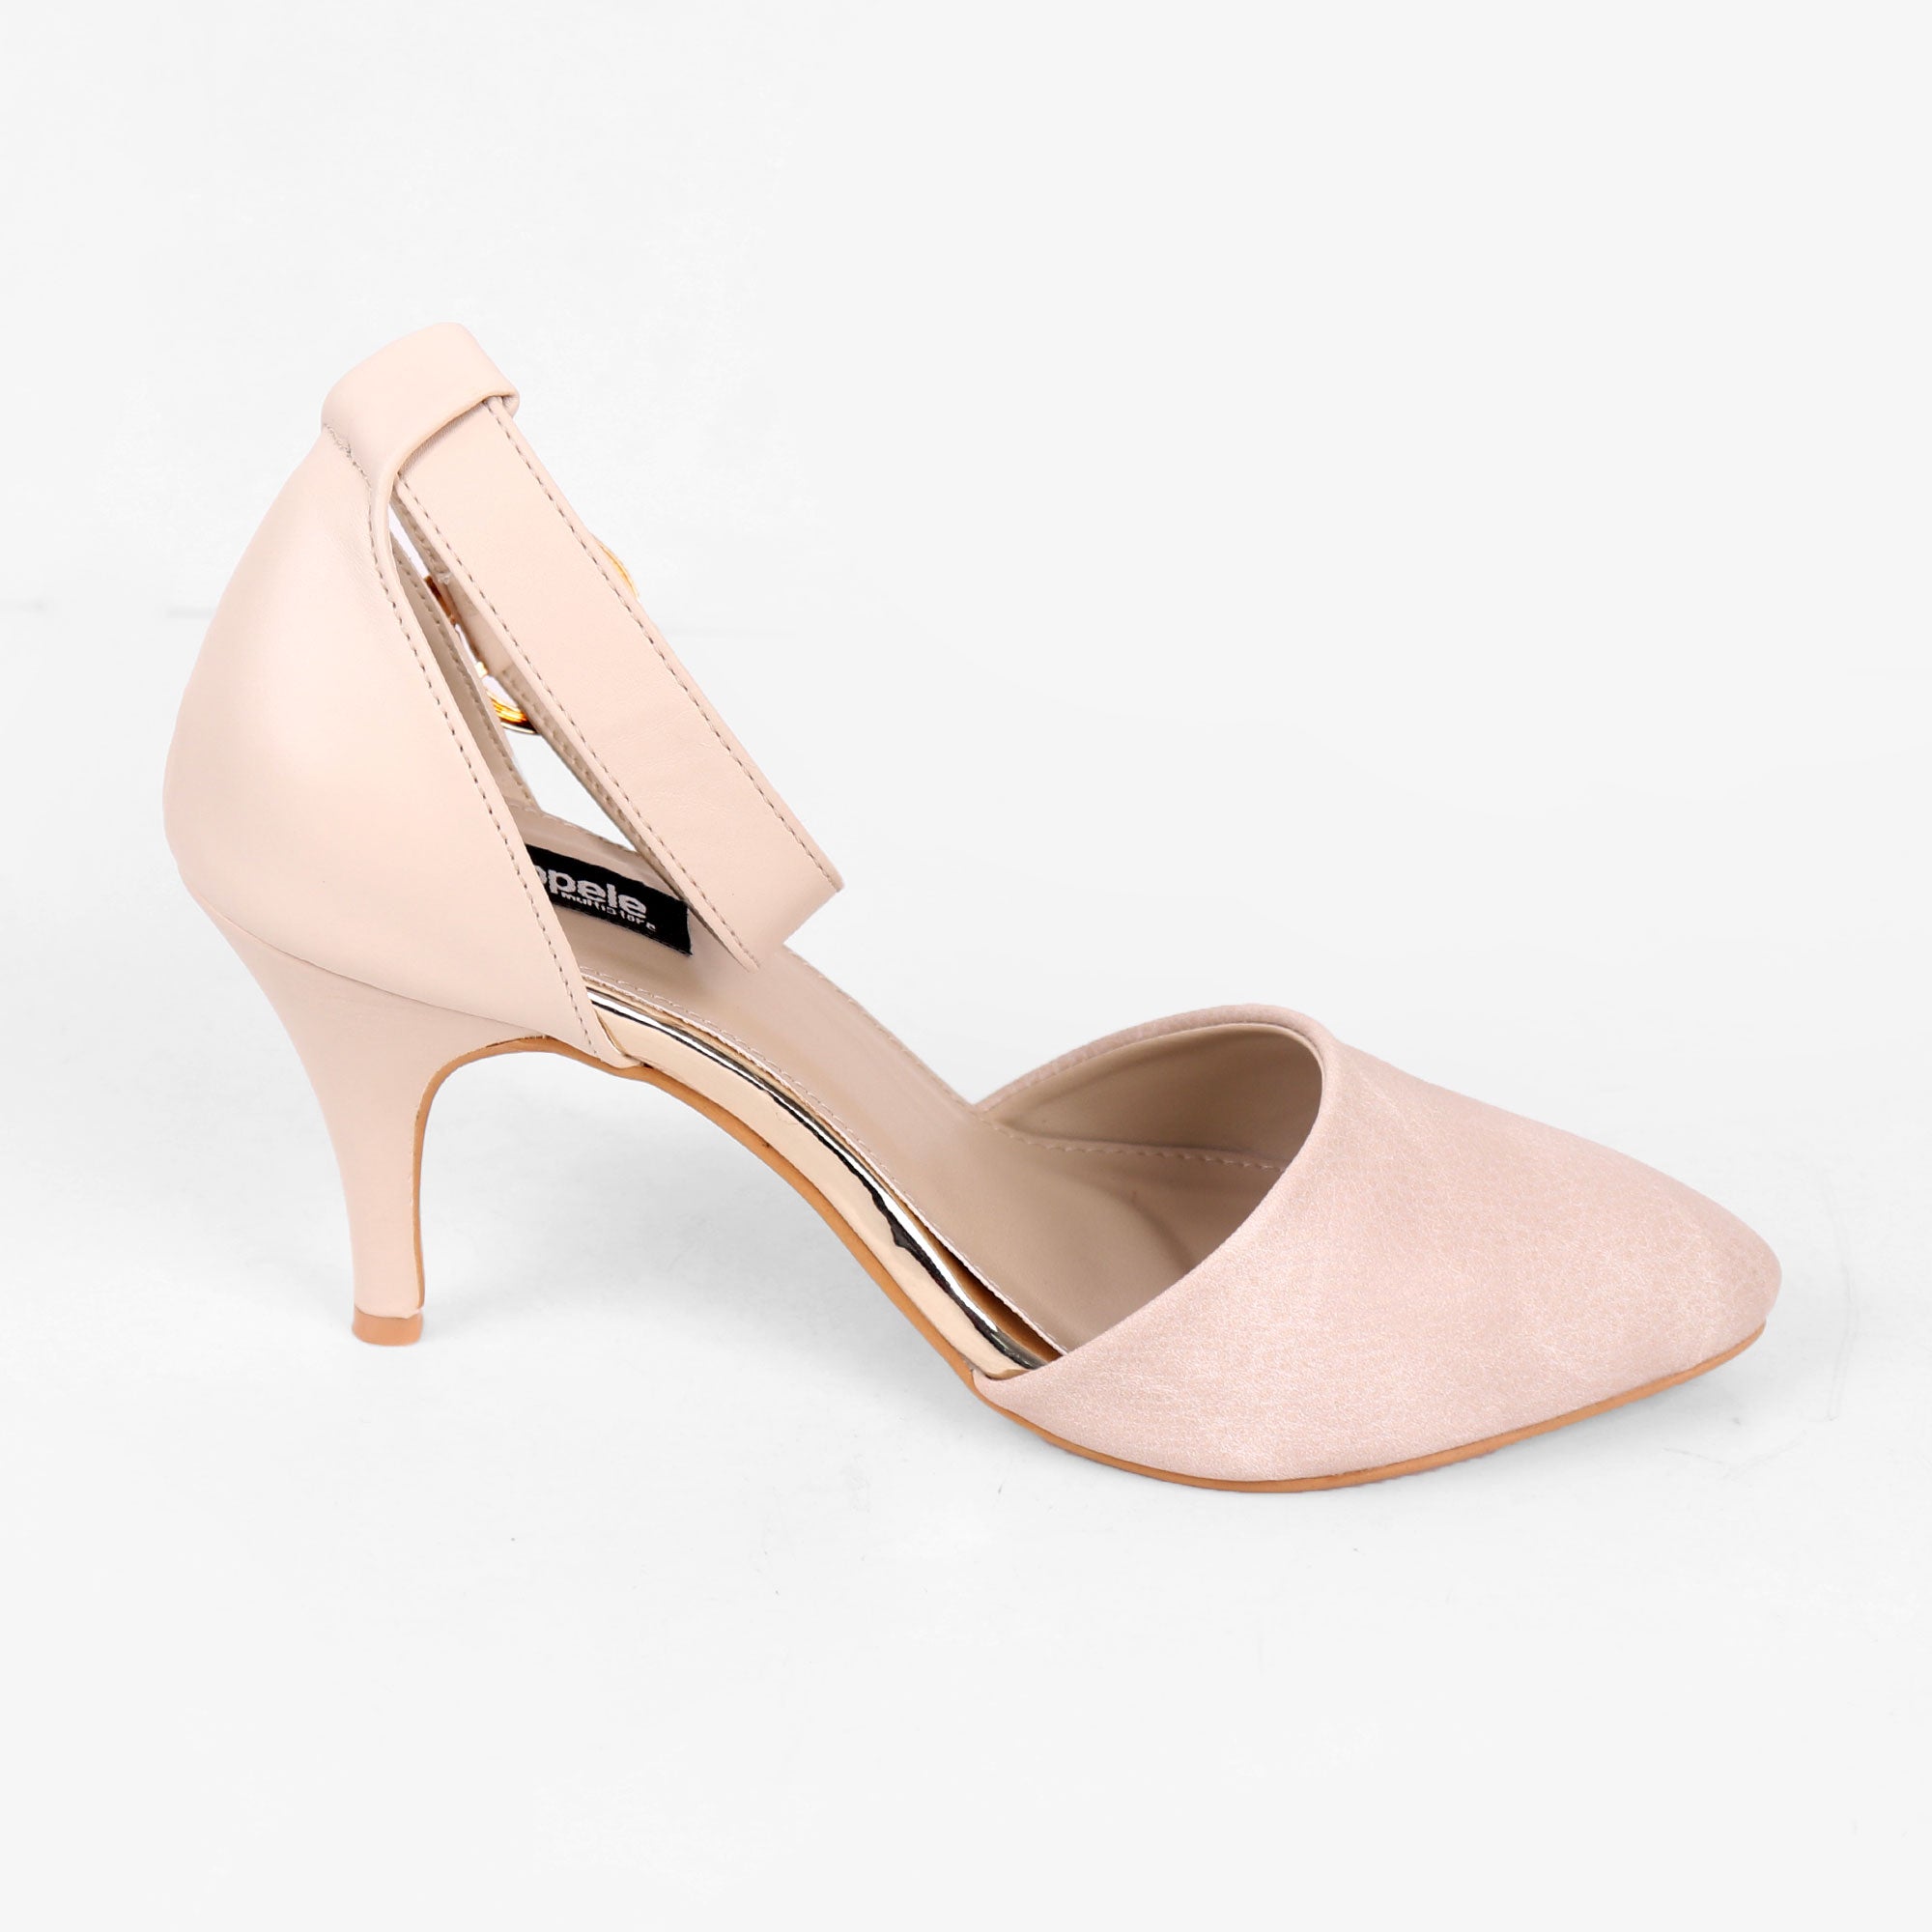 STYLZREPUBLIC Ruffle Red Ankle Strap Heels : Amazon.in: Fashion